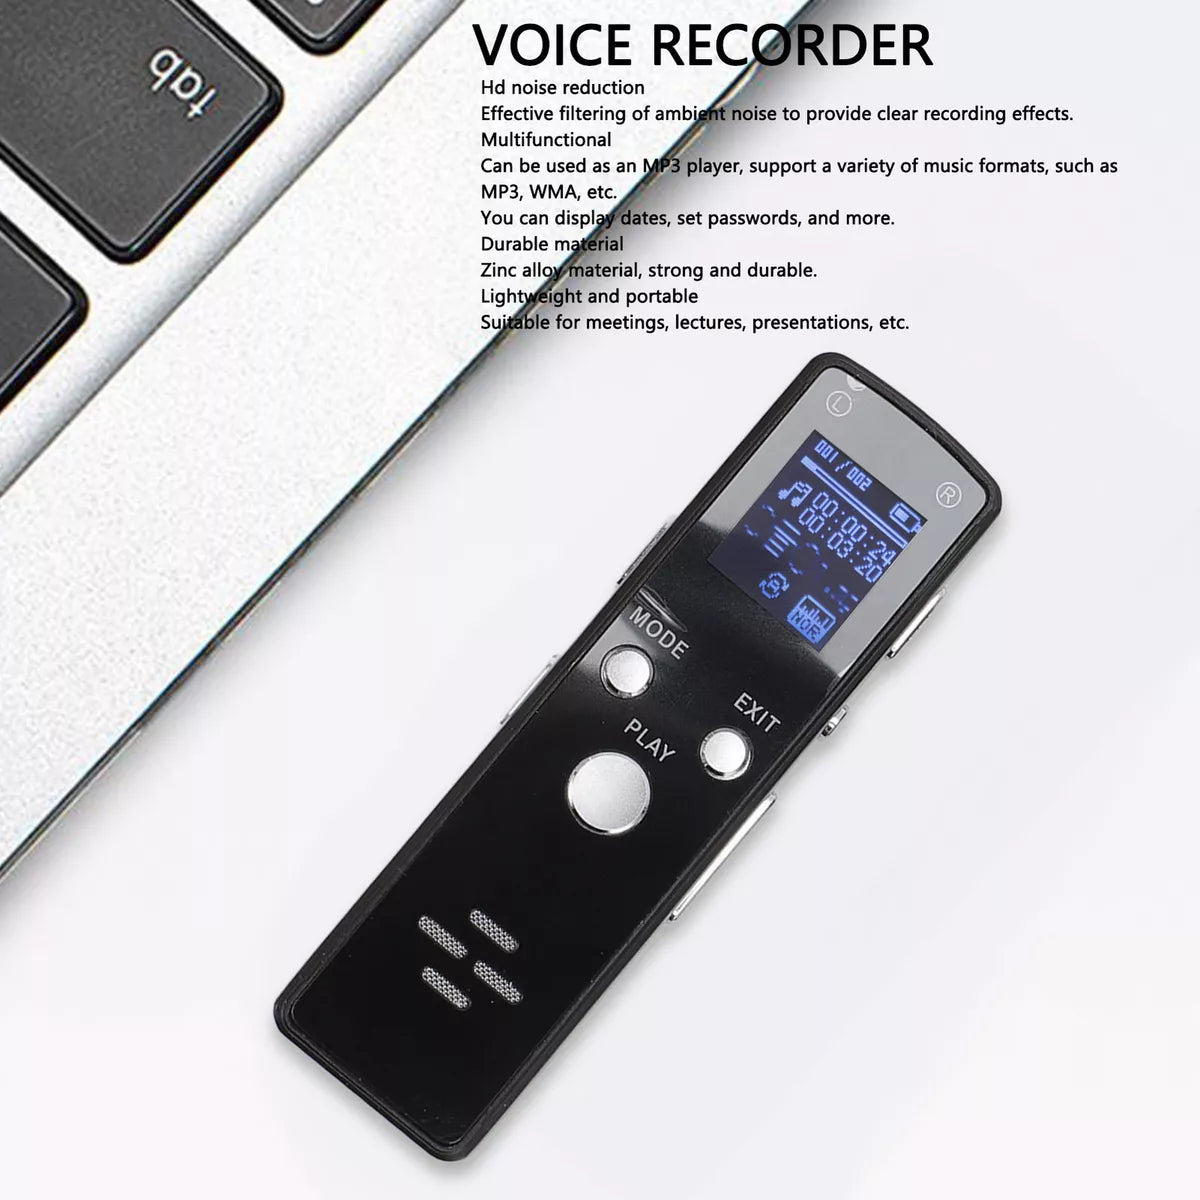 Digital Voice Recorder Portable Tape Recorder MP3 Player 8GB